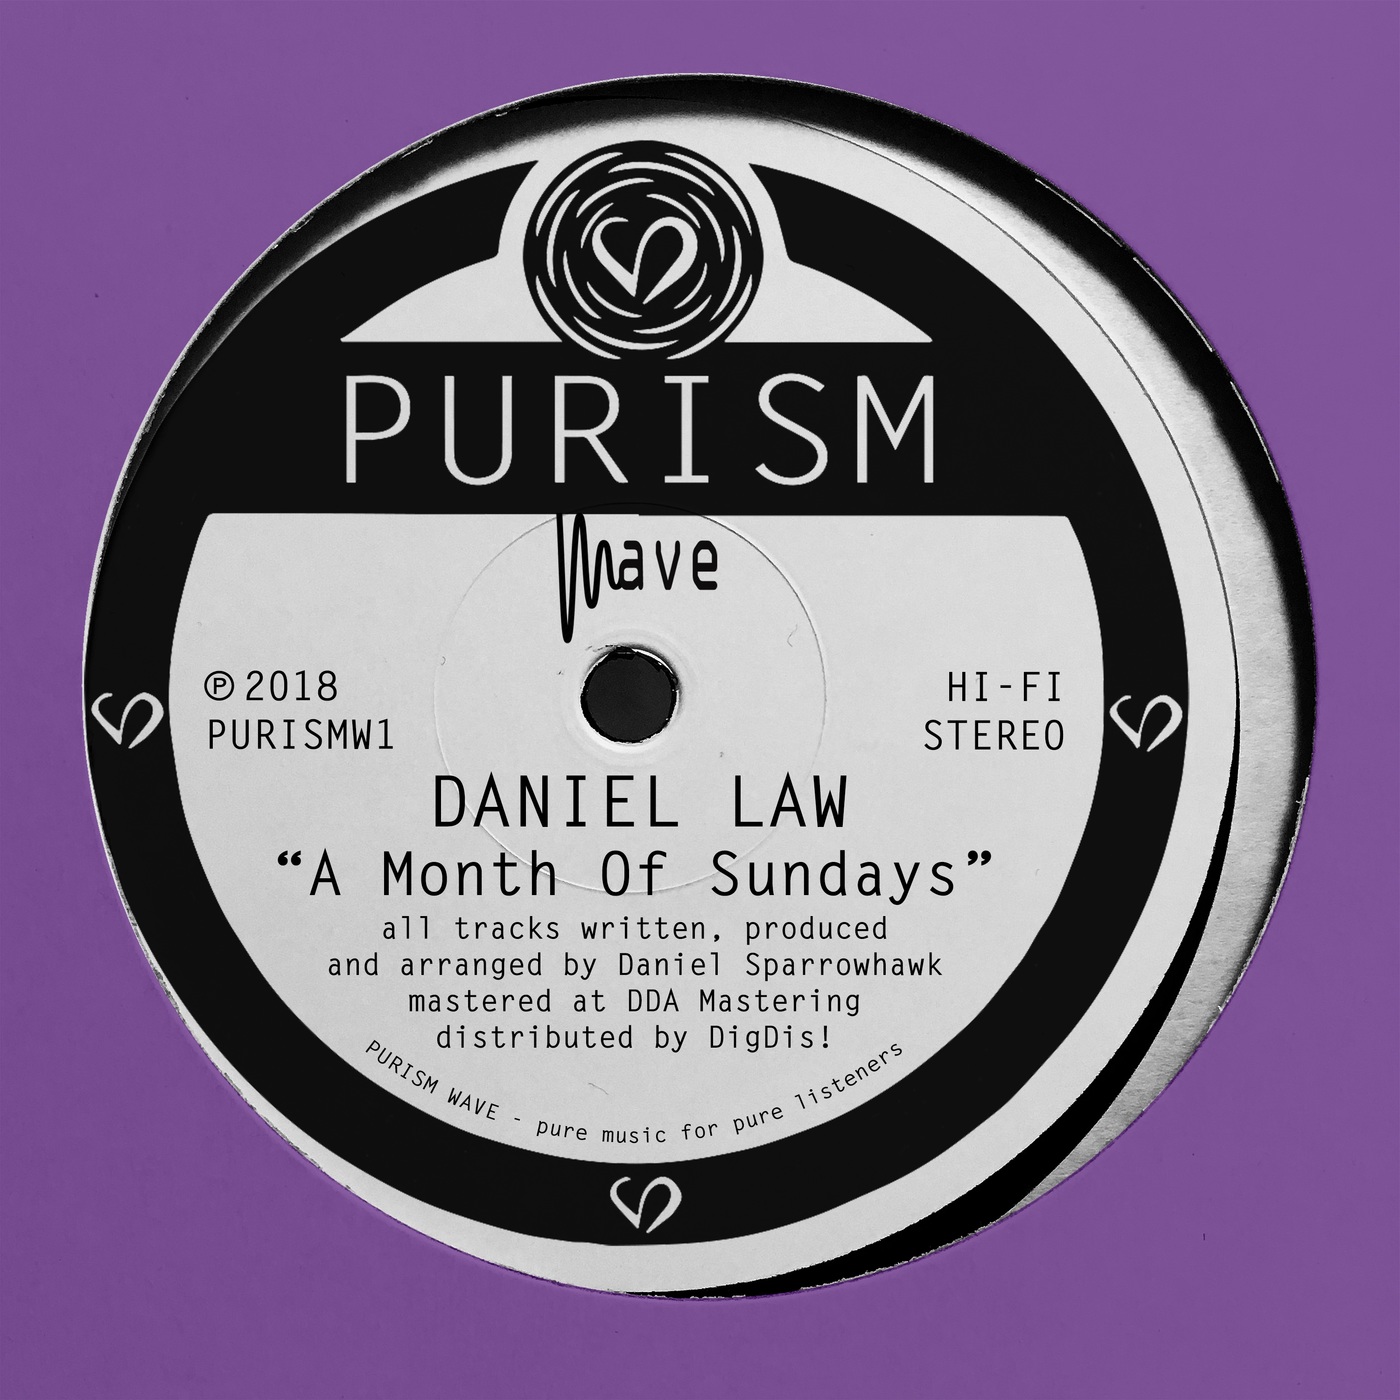 Daniel Law - A Month of Sundays / PURISM Wave